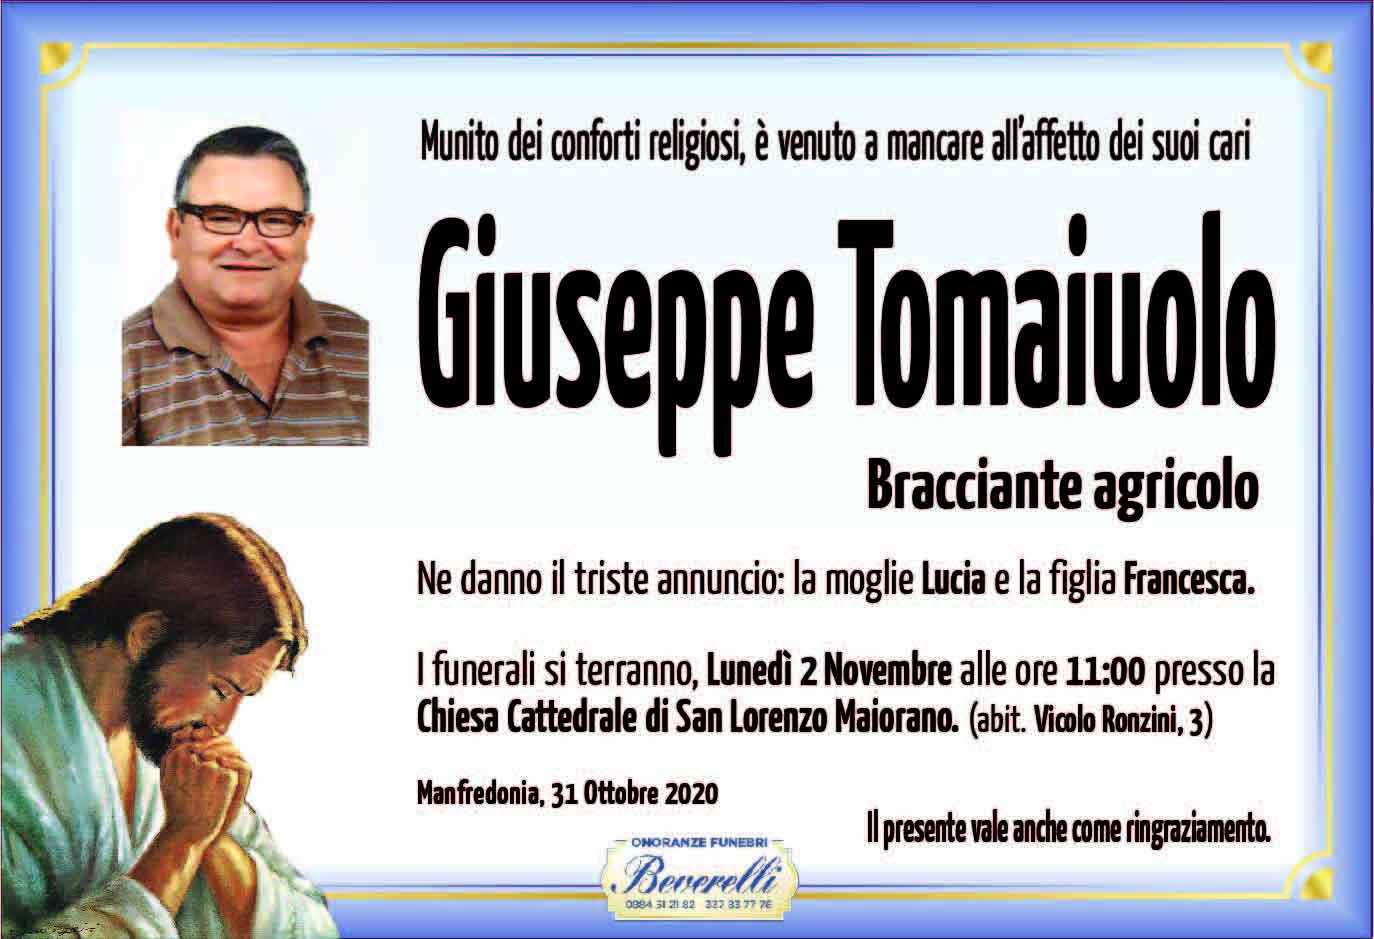 Giuseppe Tomaiuolo